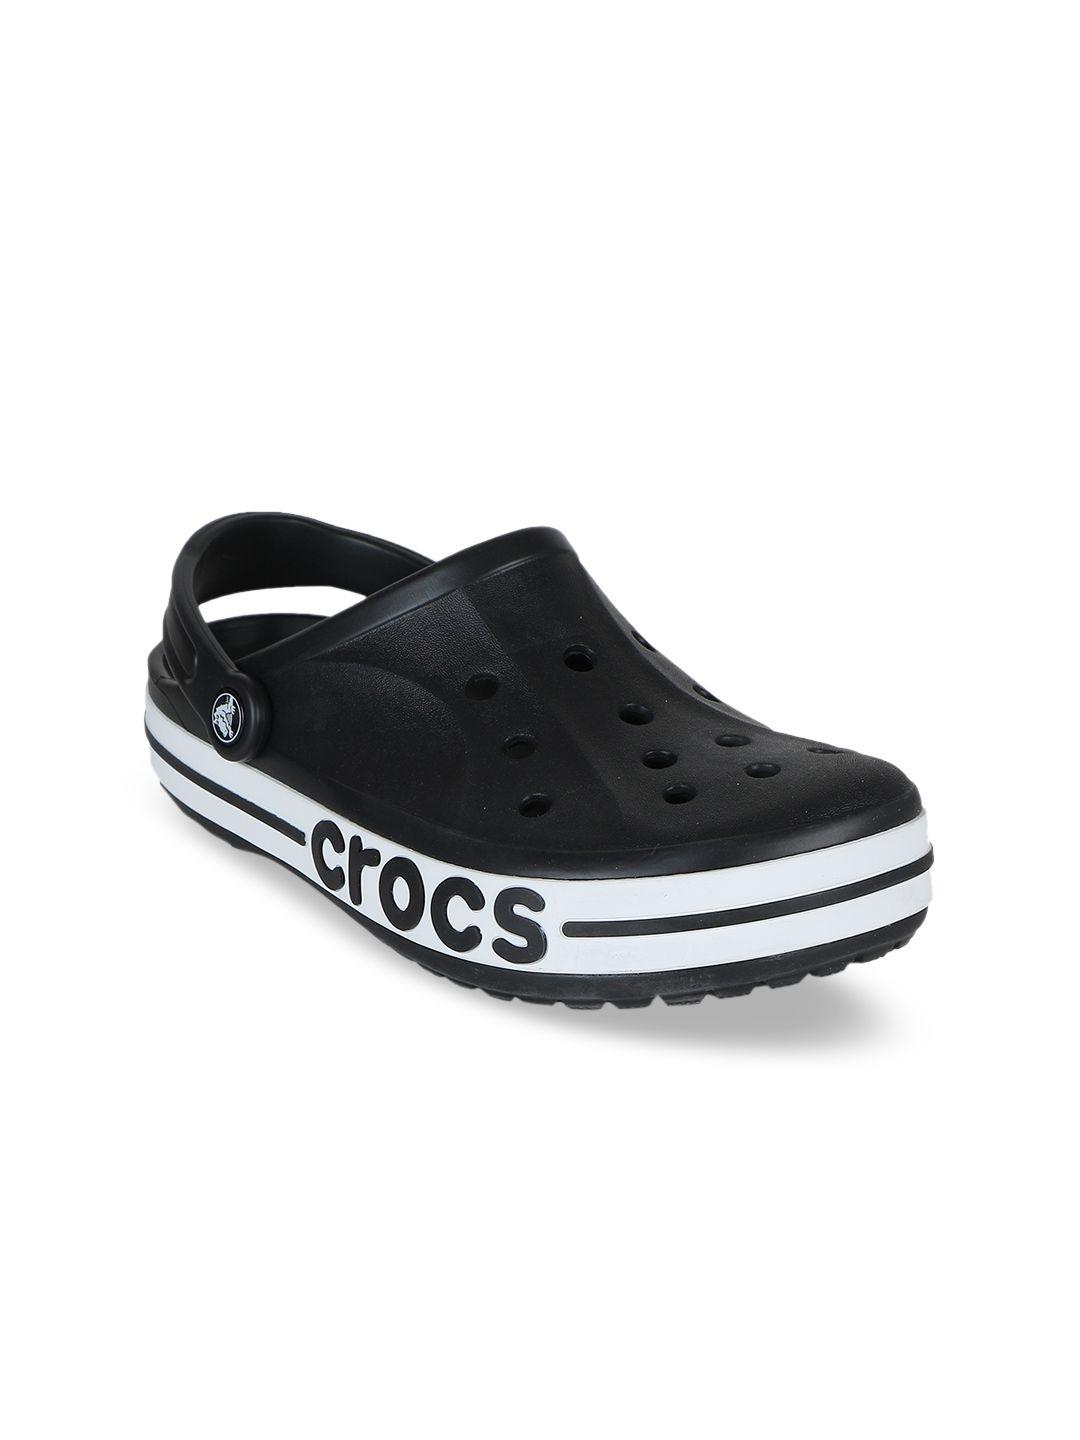 crocs women black clogs